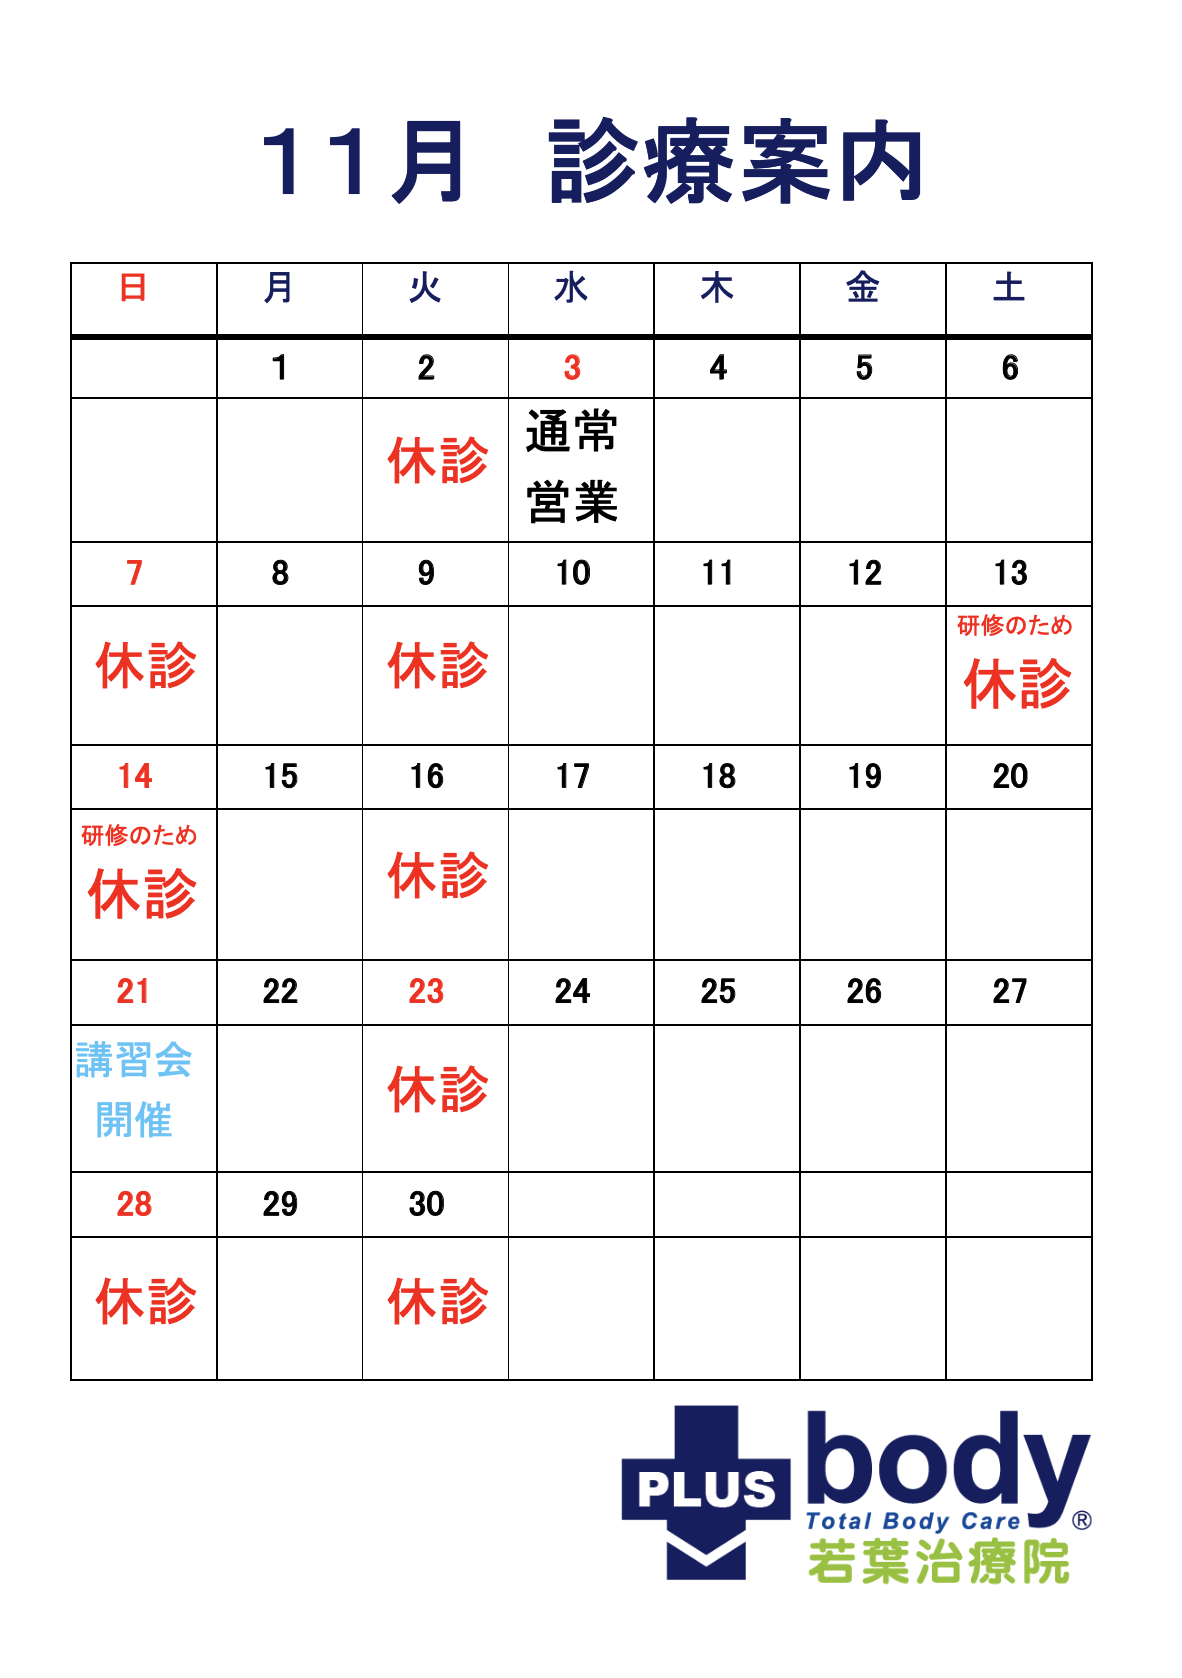 img src="スクリーンショット 2021-11-03 11.21.22.png" alt="カレンダー"